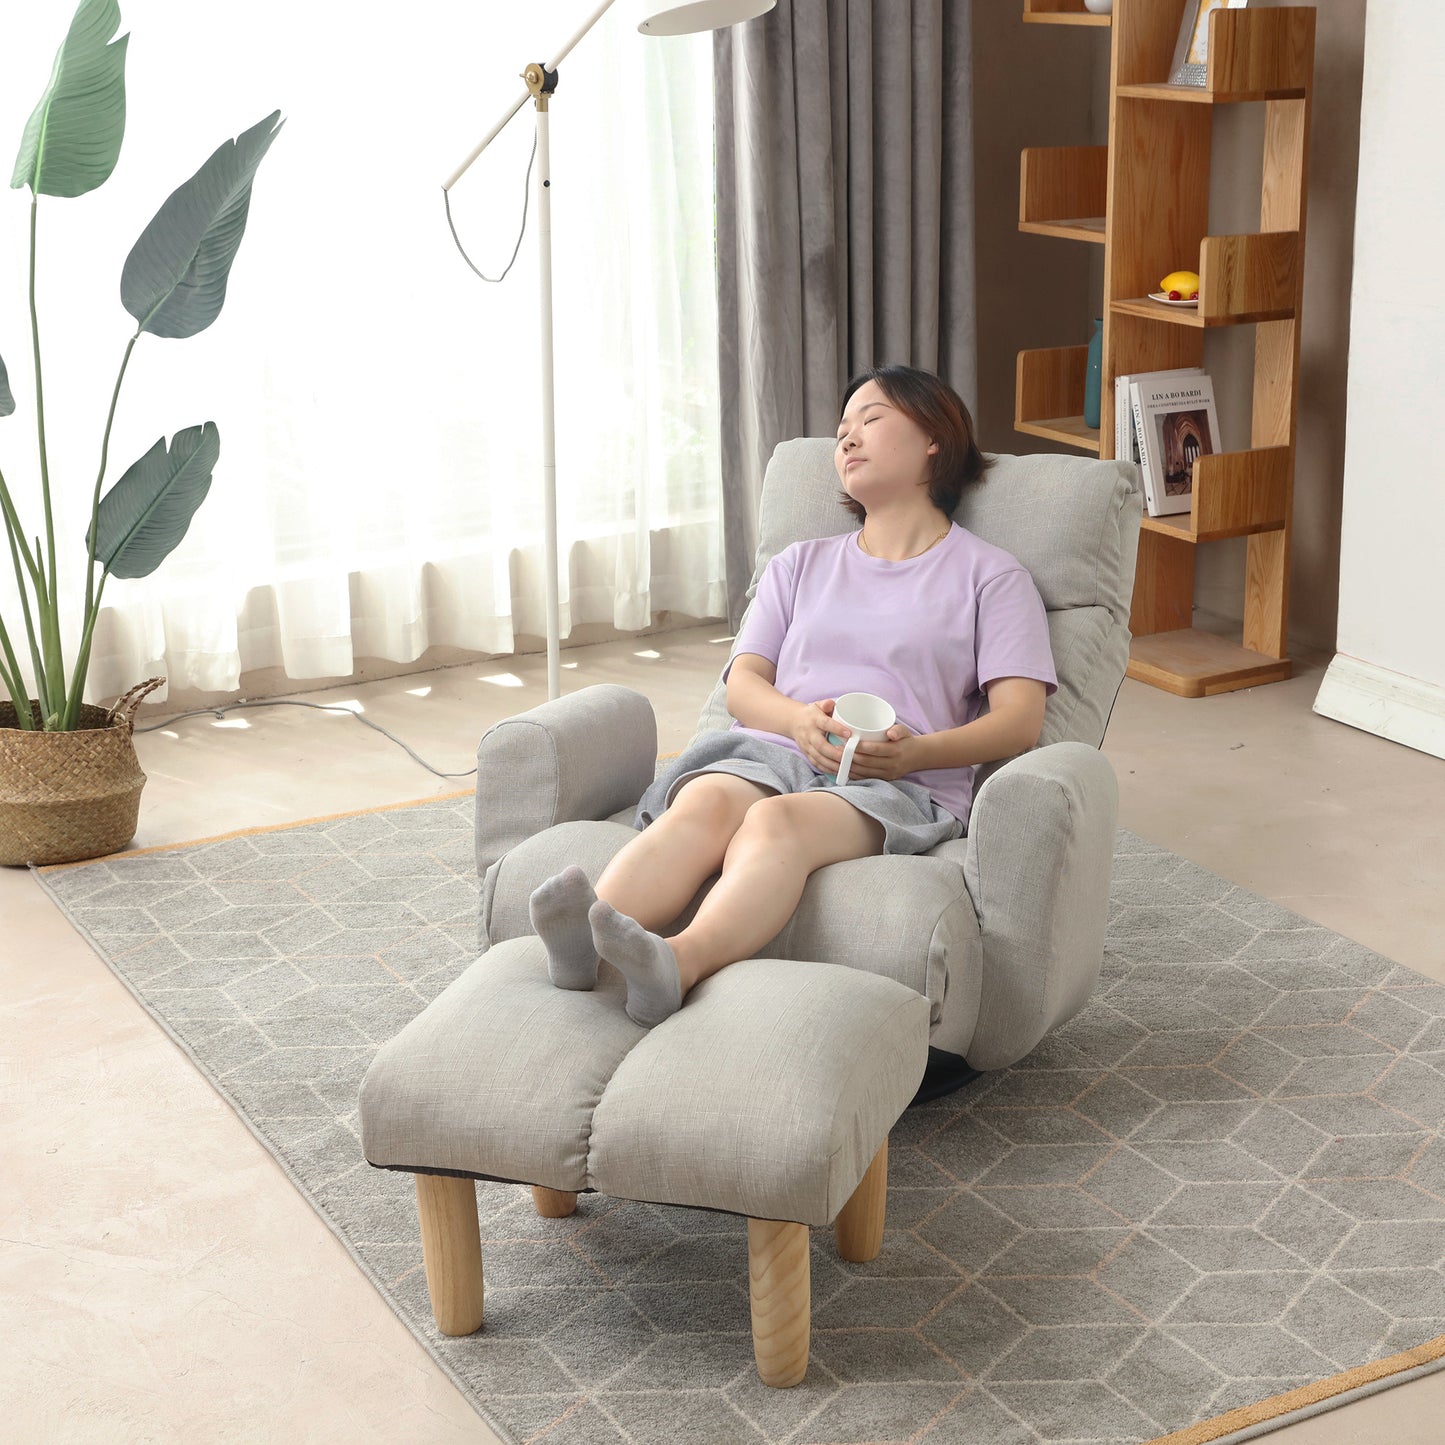 360° Rotatable Chair: Head and Waist Adjustable Living Room